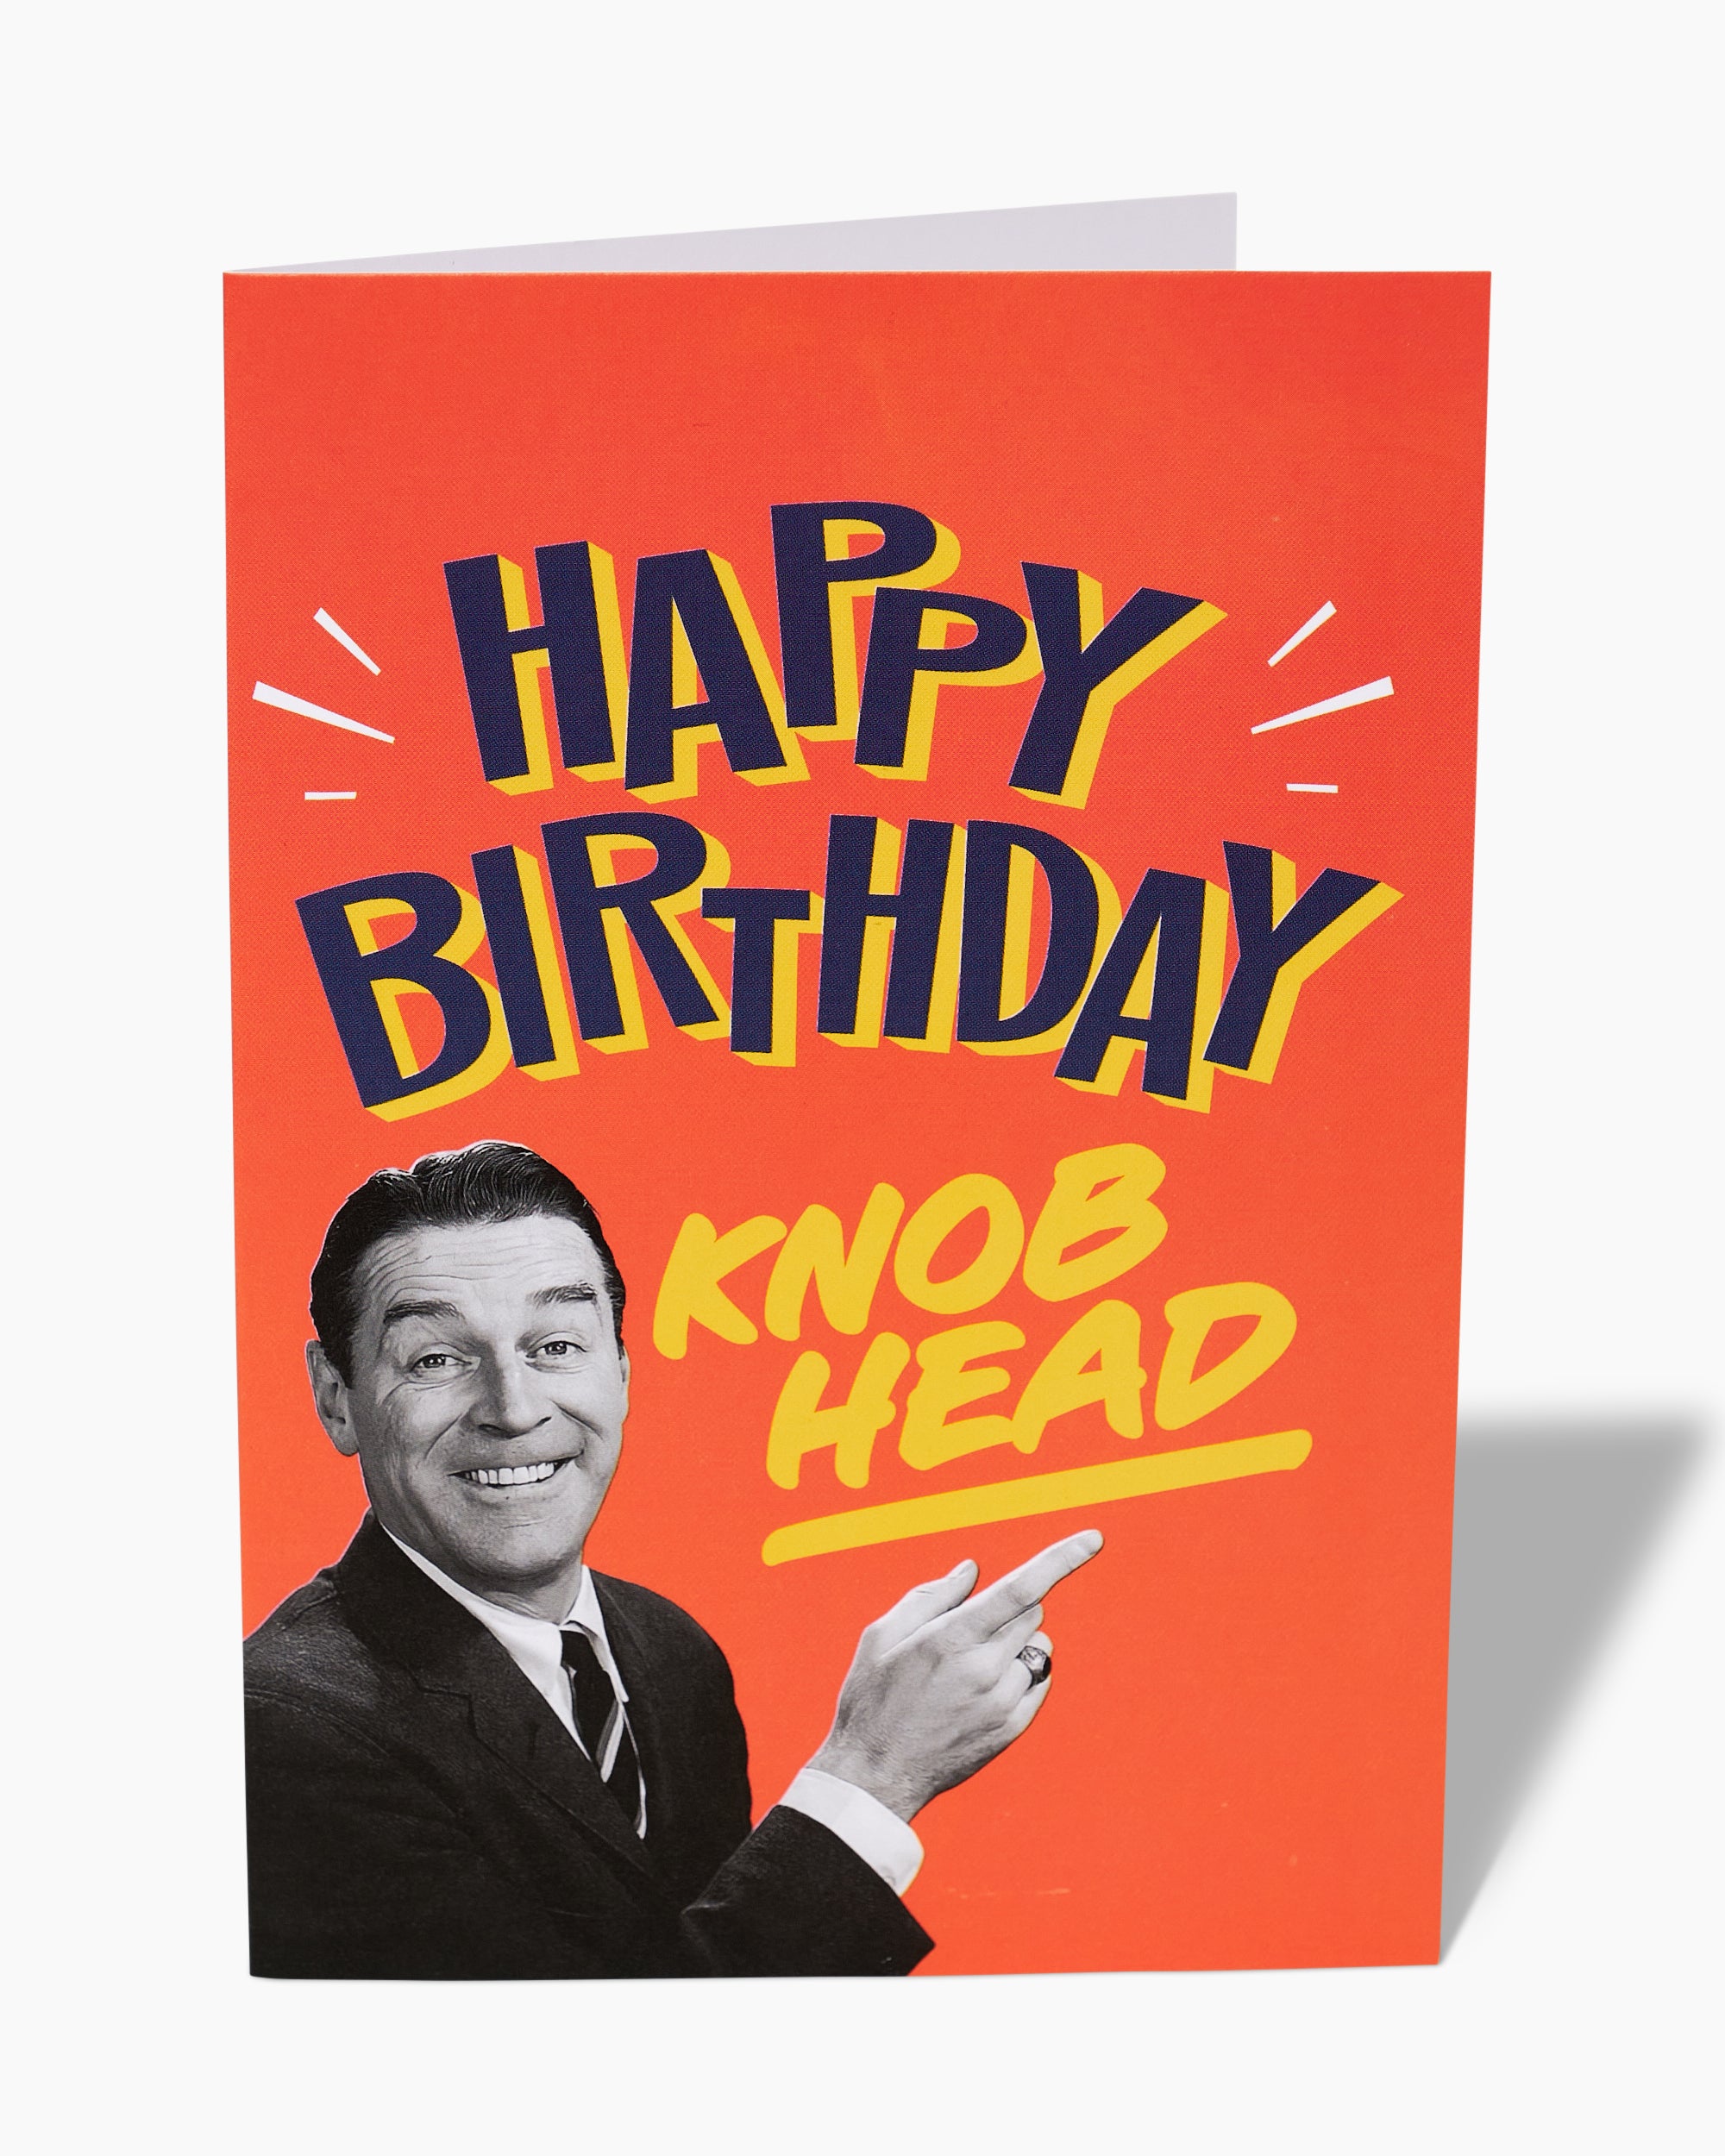 Knob Head Greeting Card Australia Online